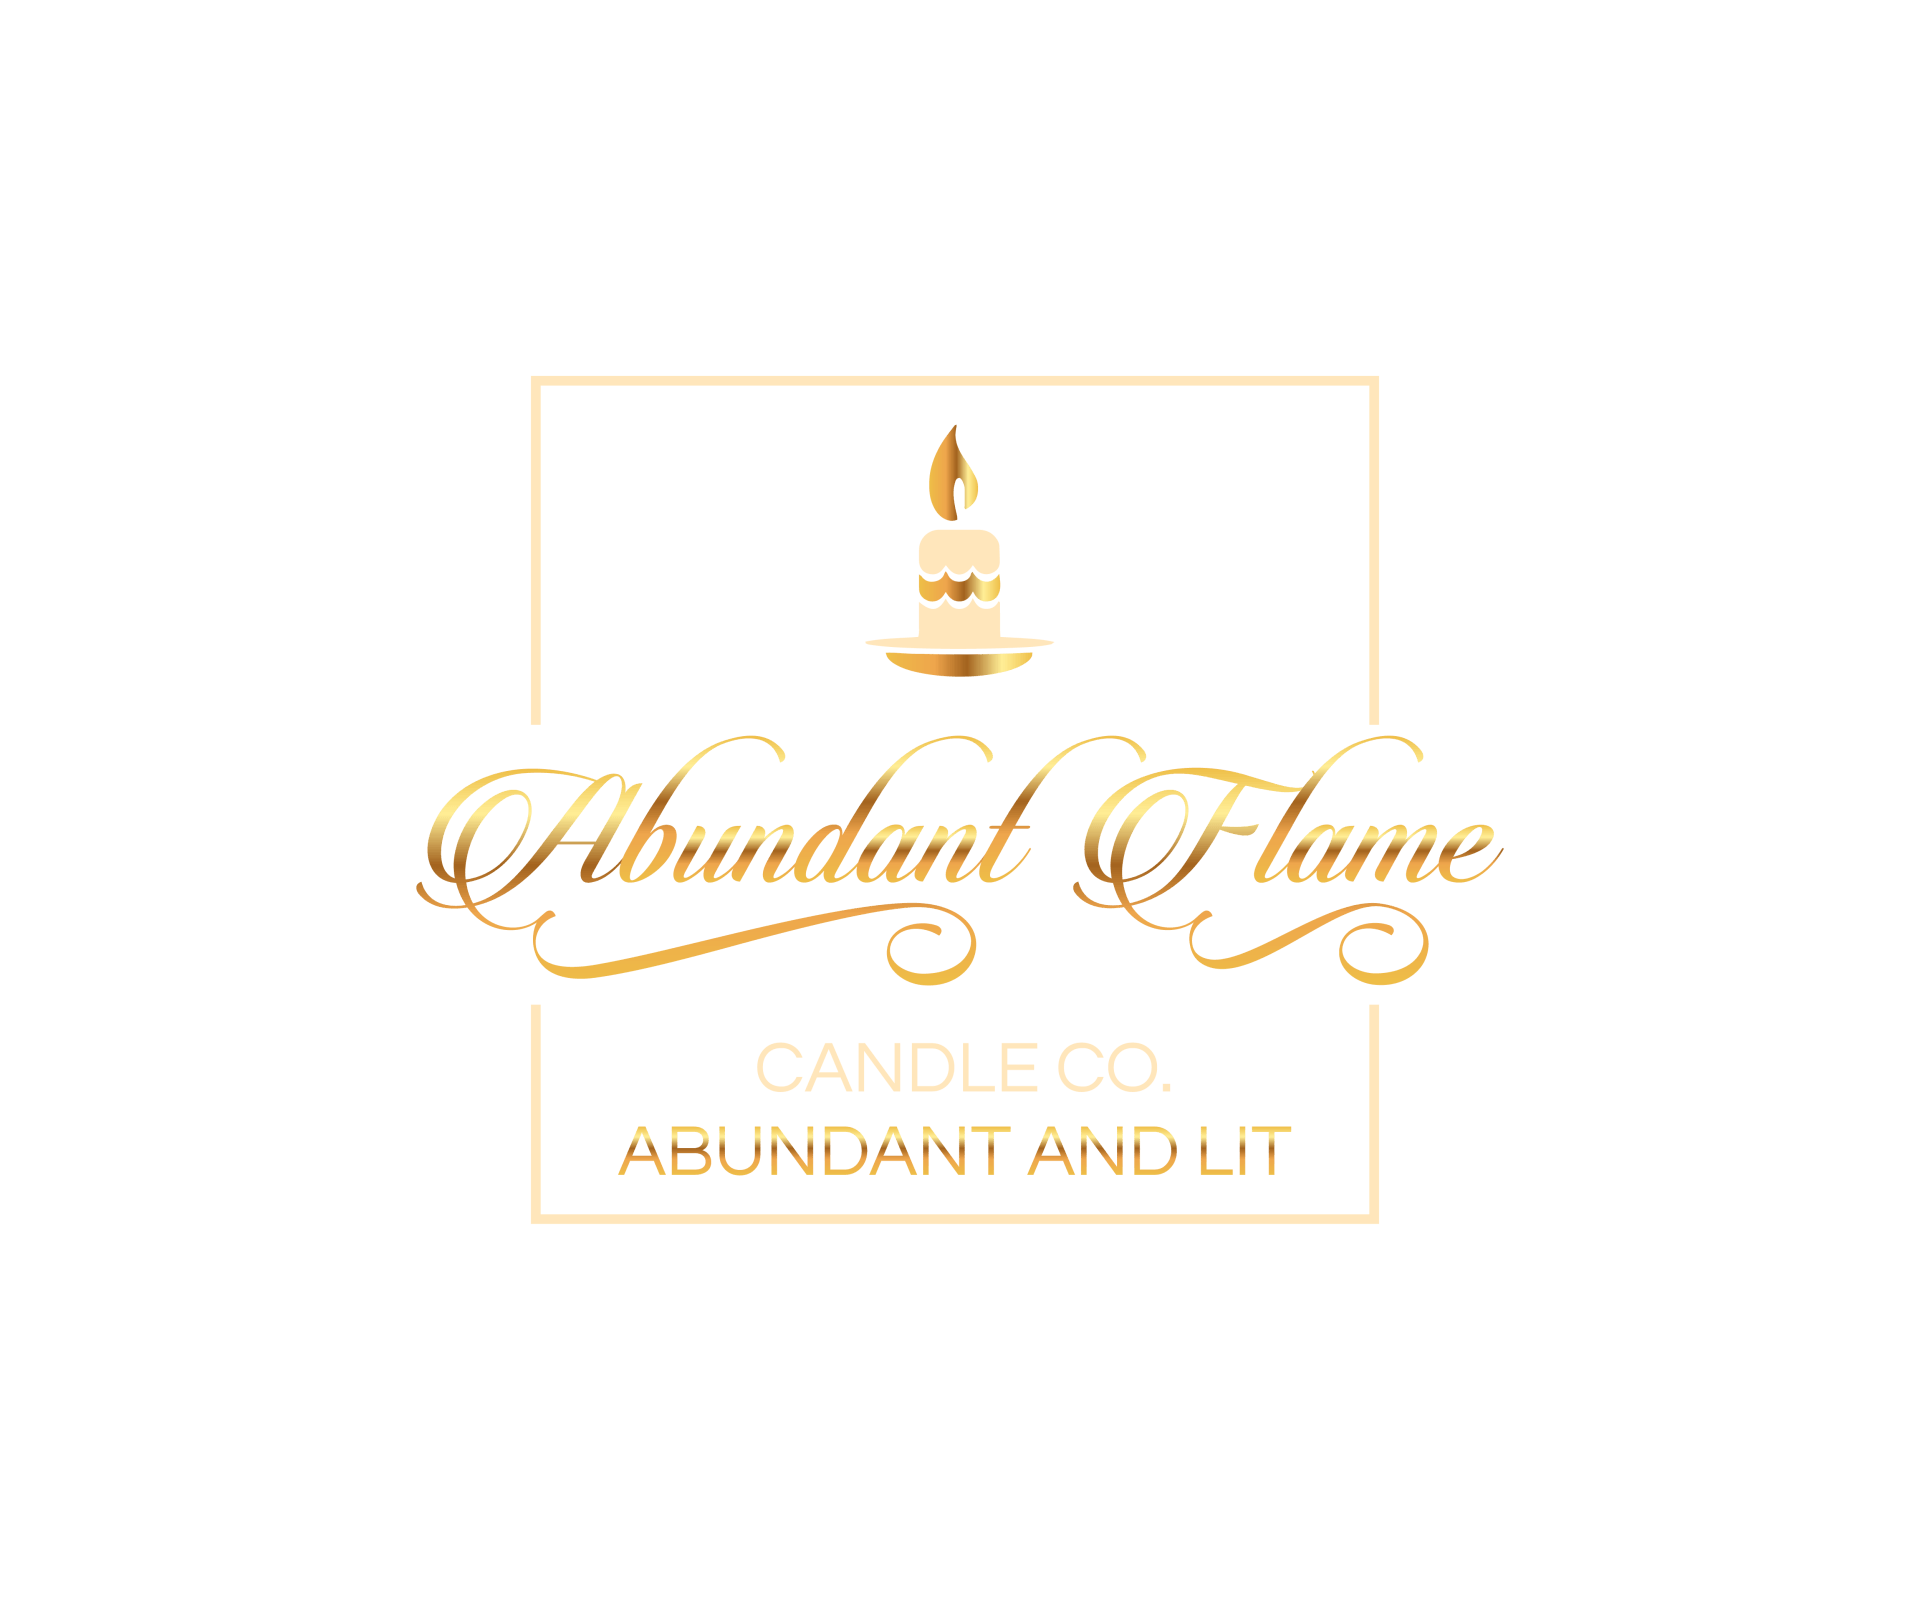 Abundant Flame Candle Co.